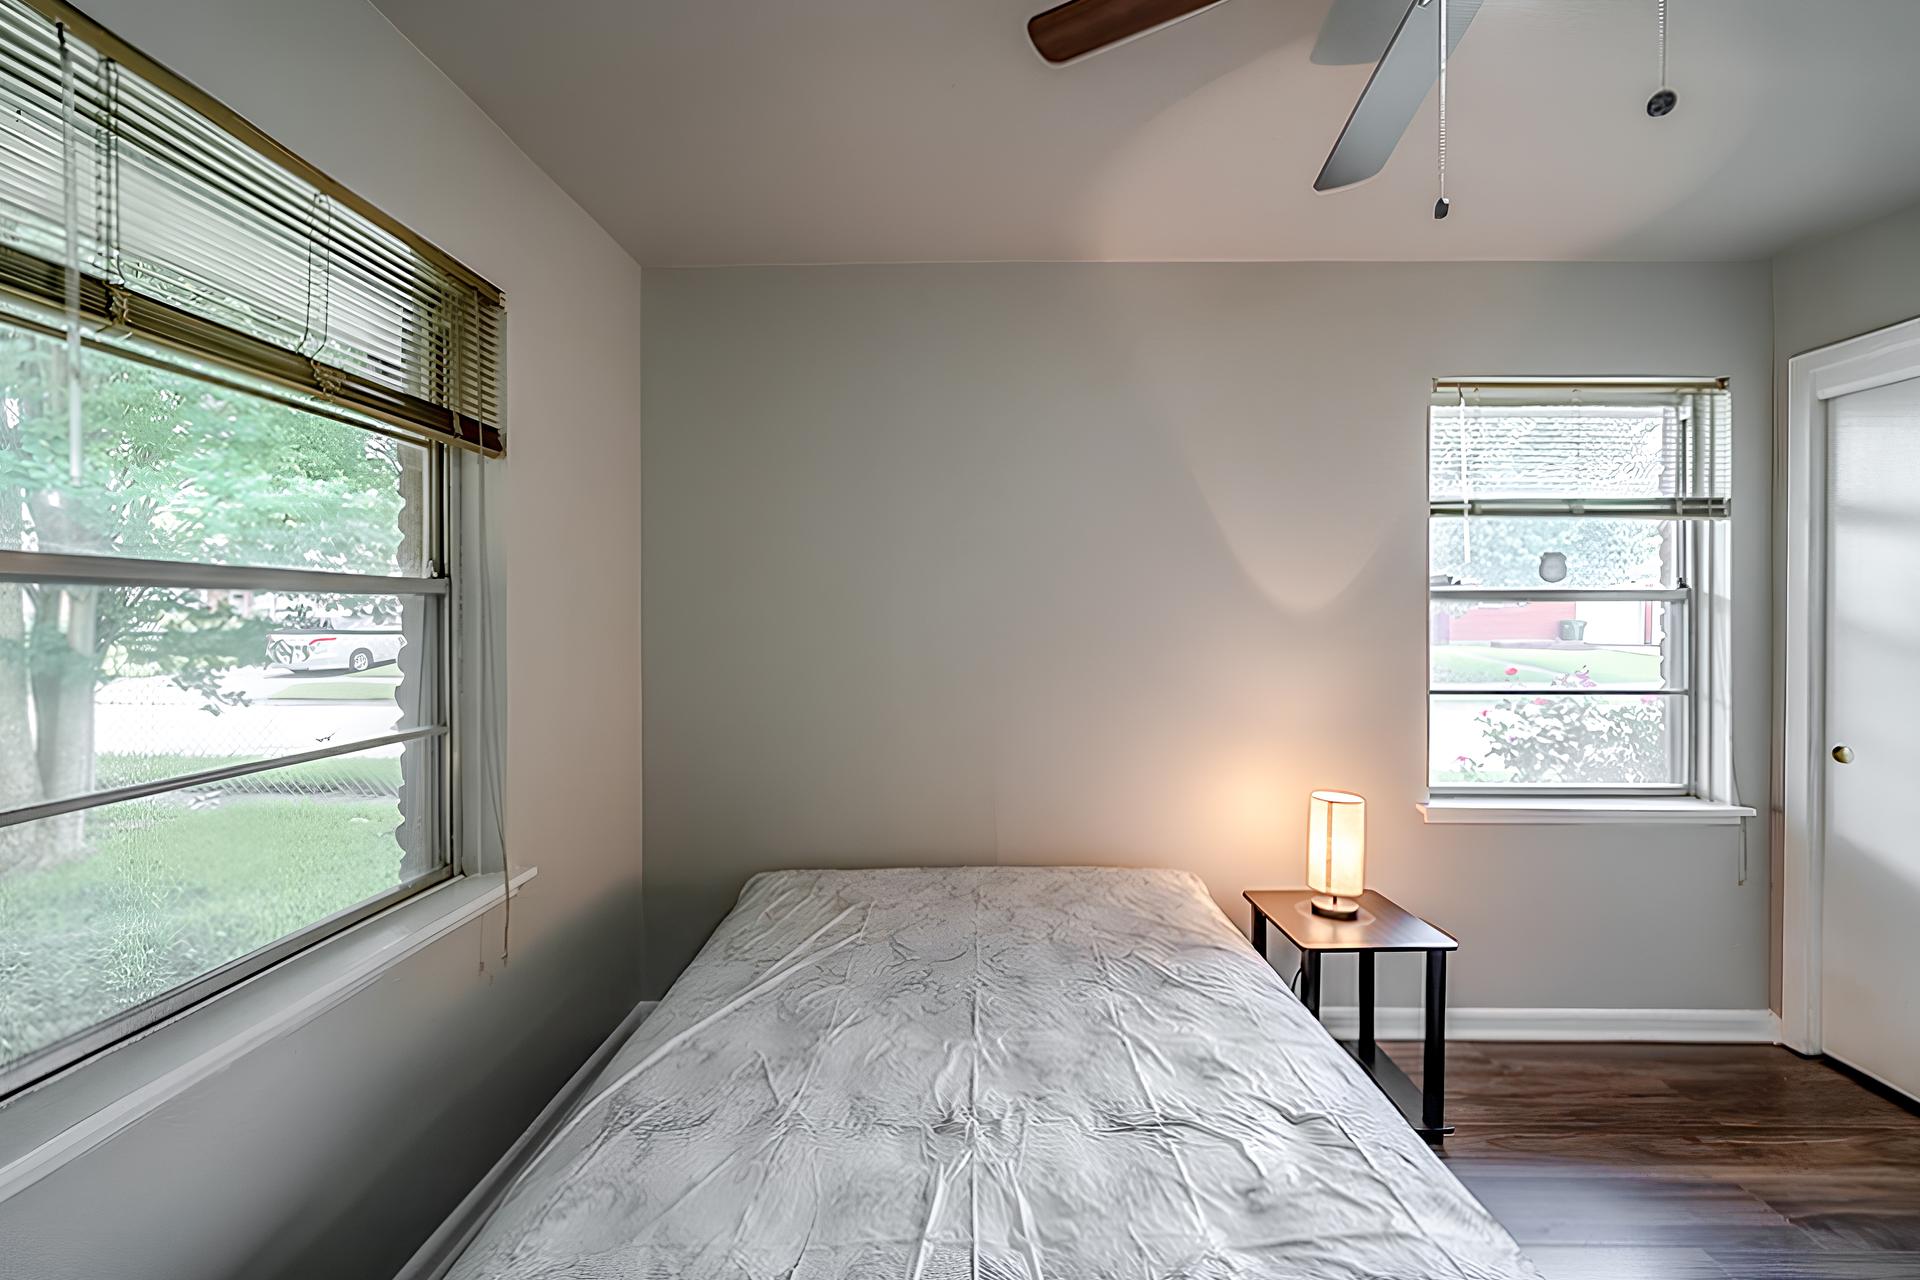 bedroom, detected: ceiling fan, hardwood, window blind, bed